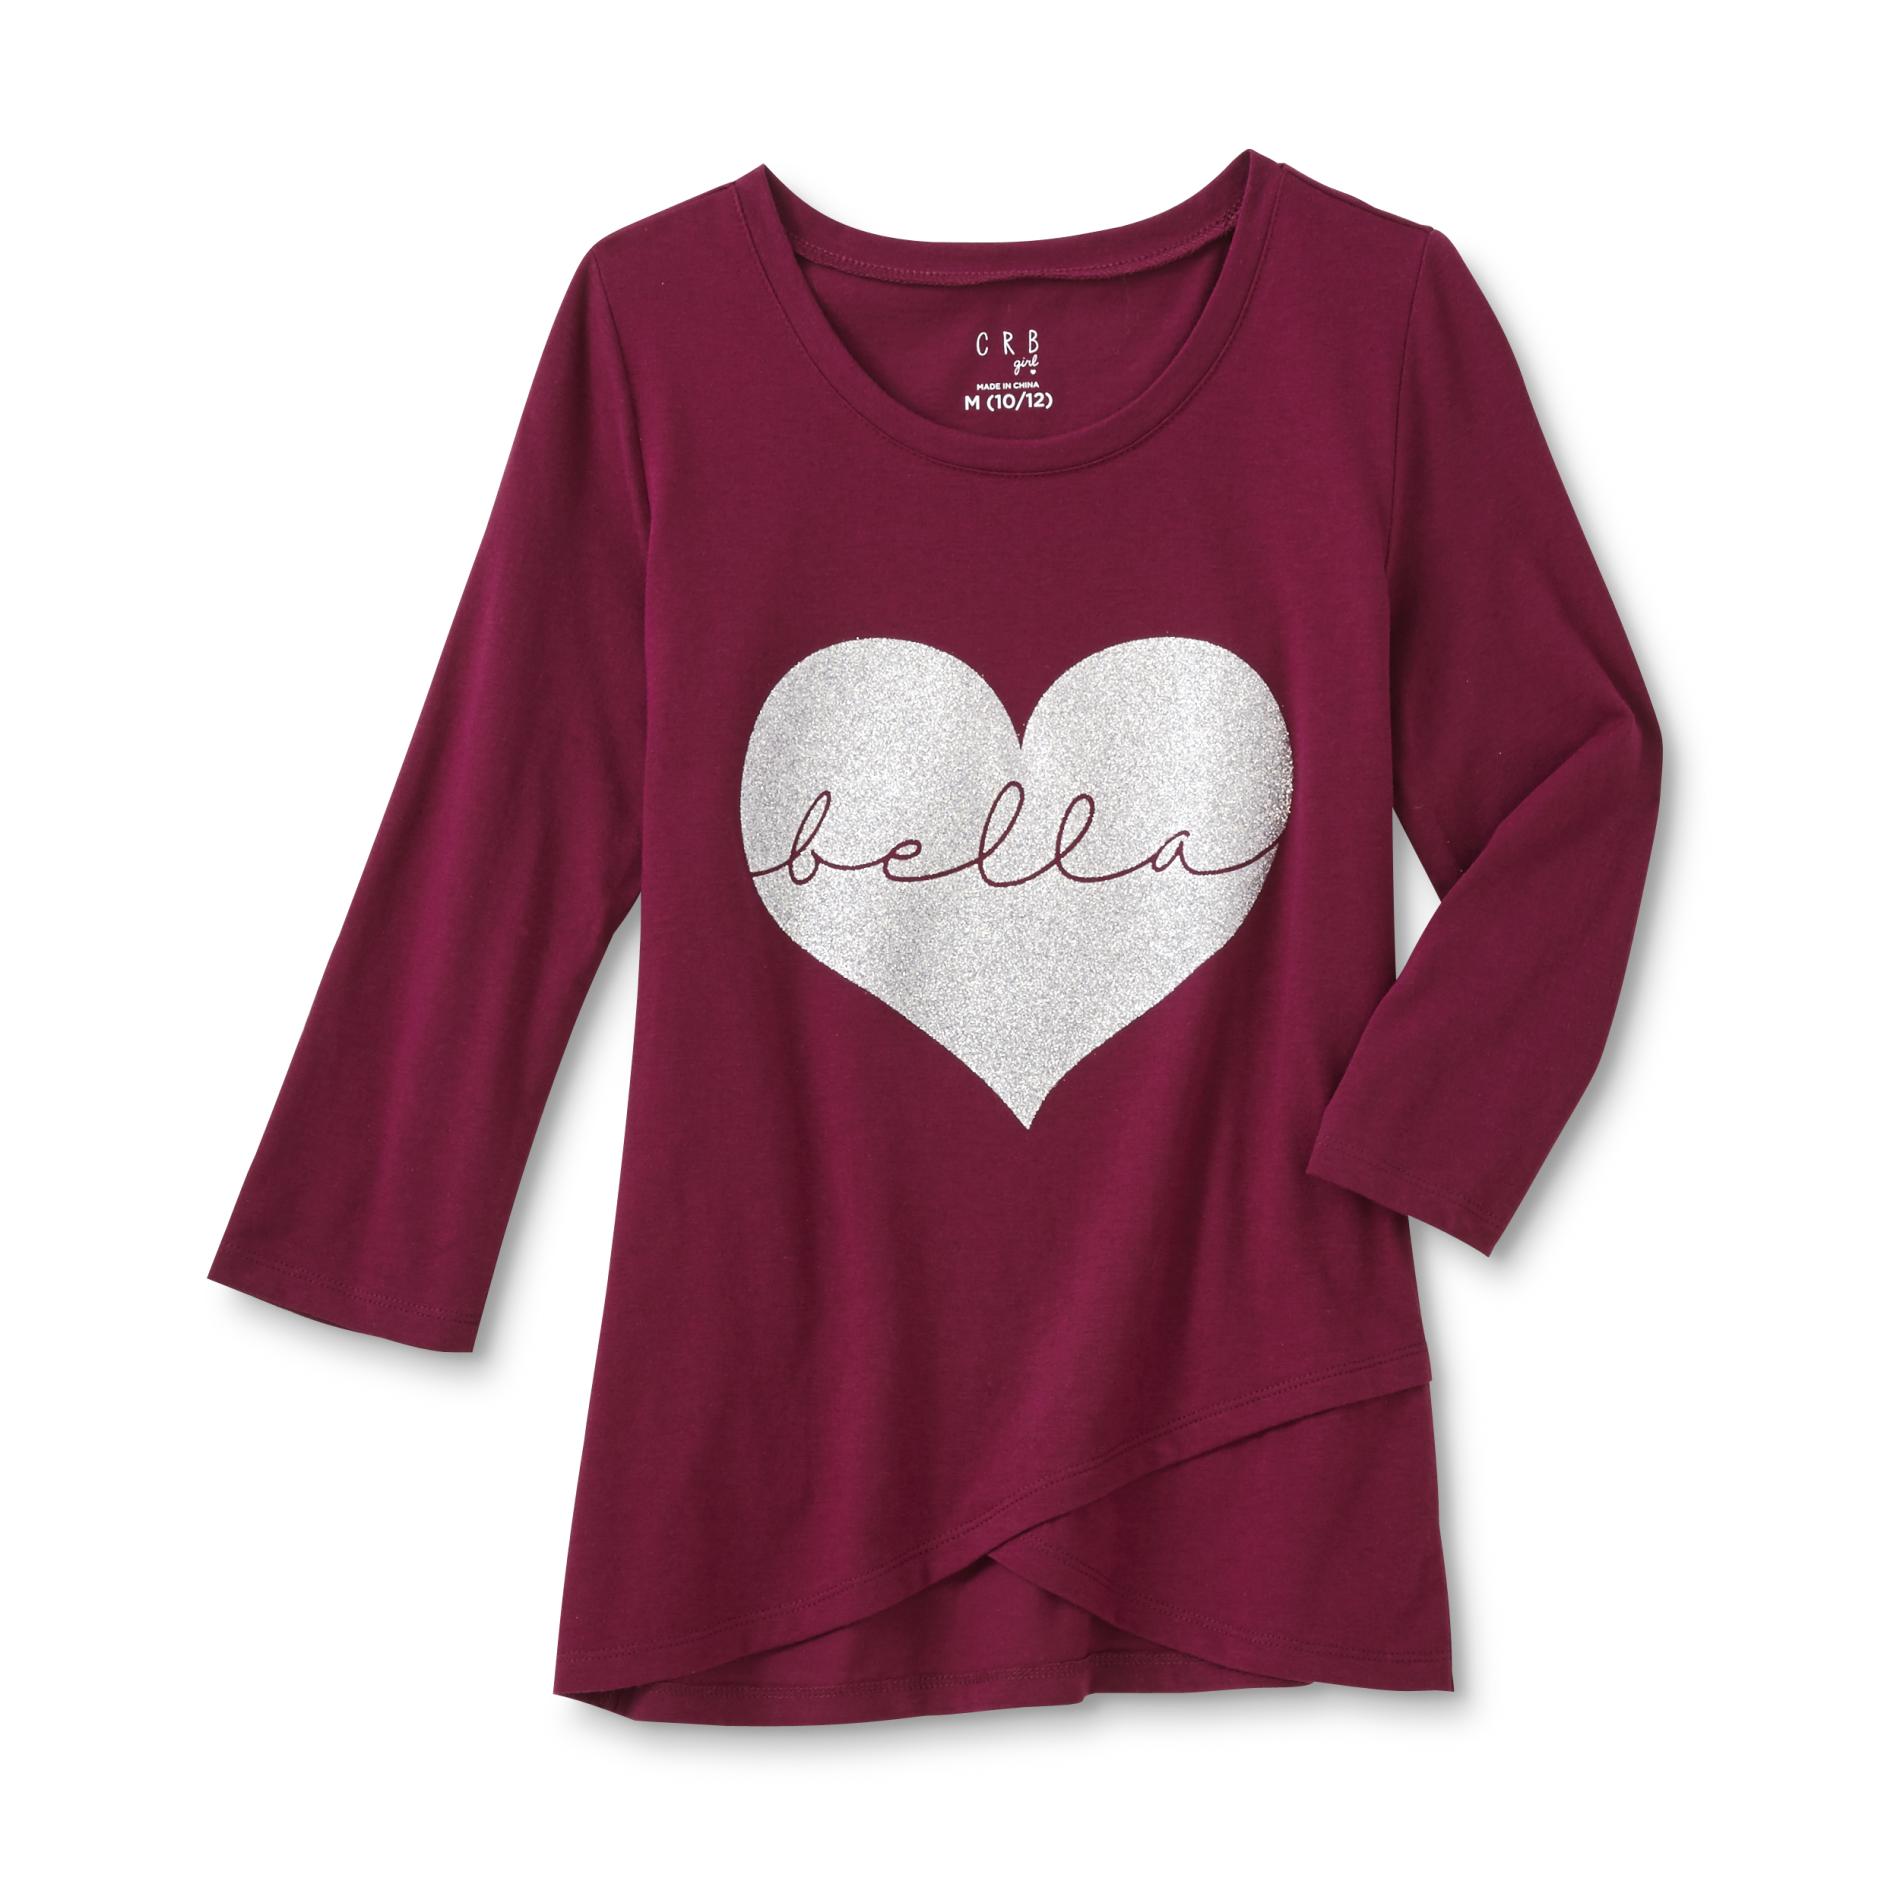 Canyon River Blues Girl's Graphic T-Shirt - Bella